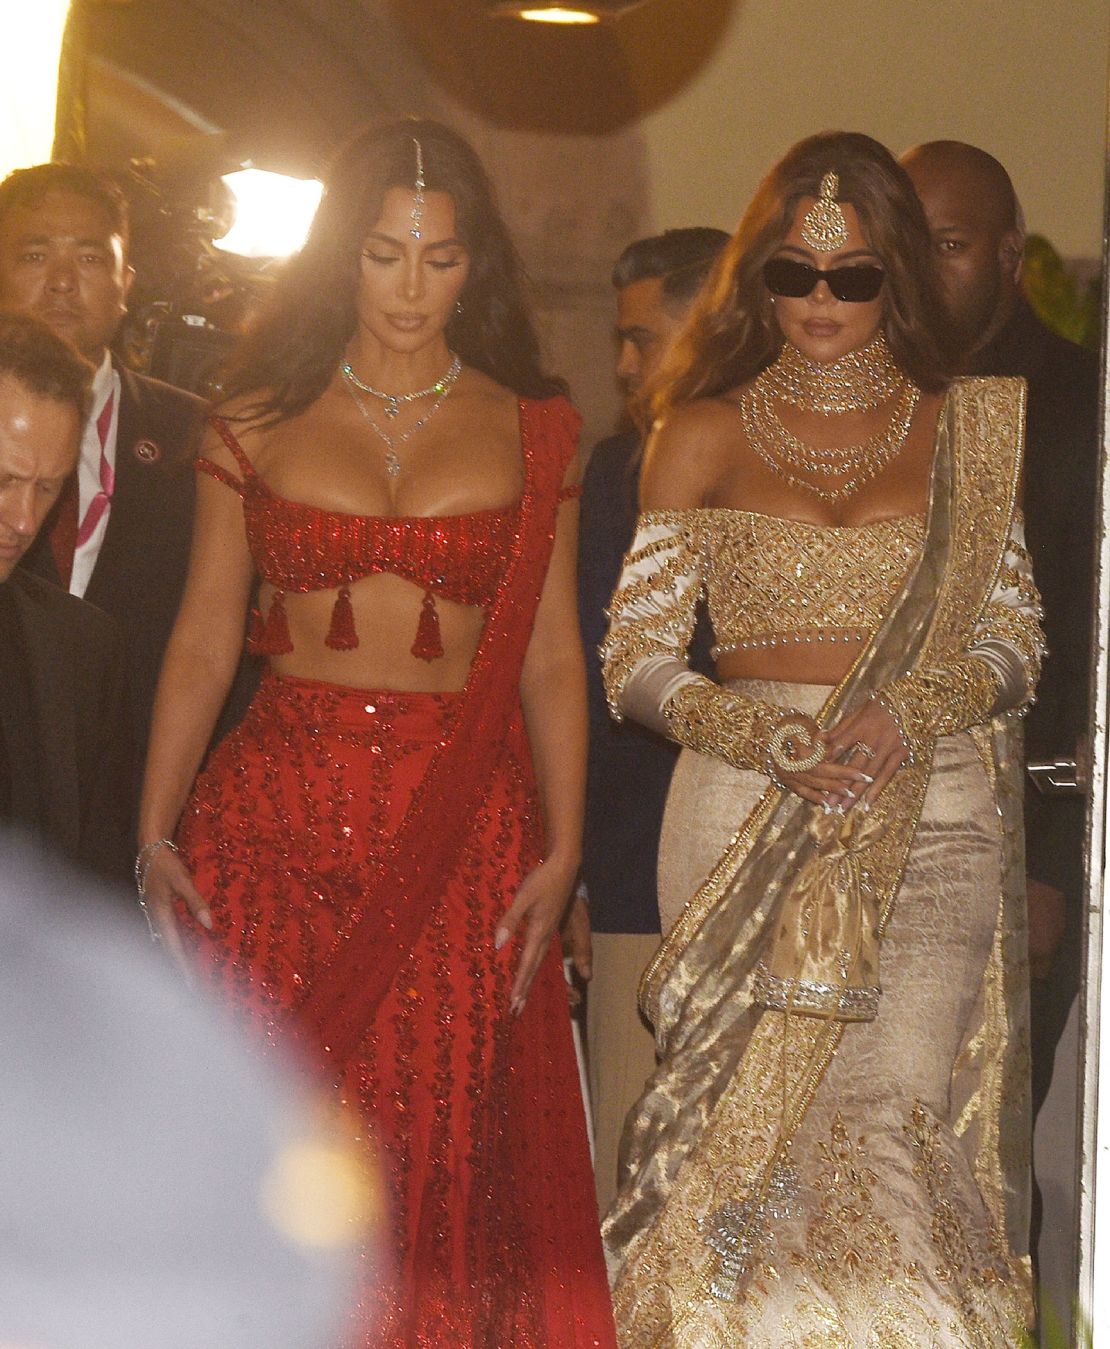 Kim and Khloé Kardashian are seen arriving at the Ambani wedding on Friday.